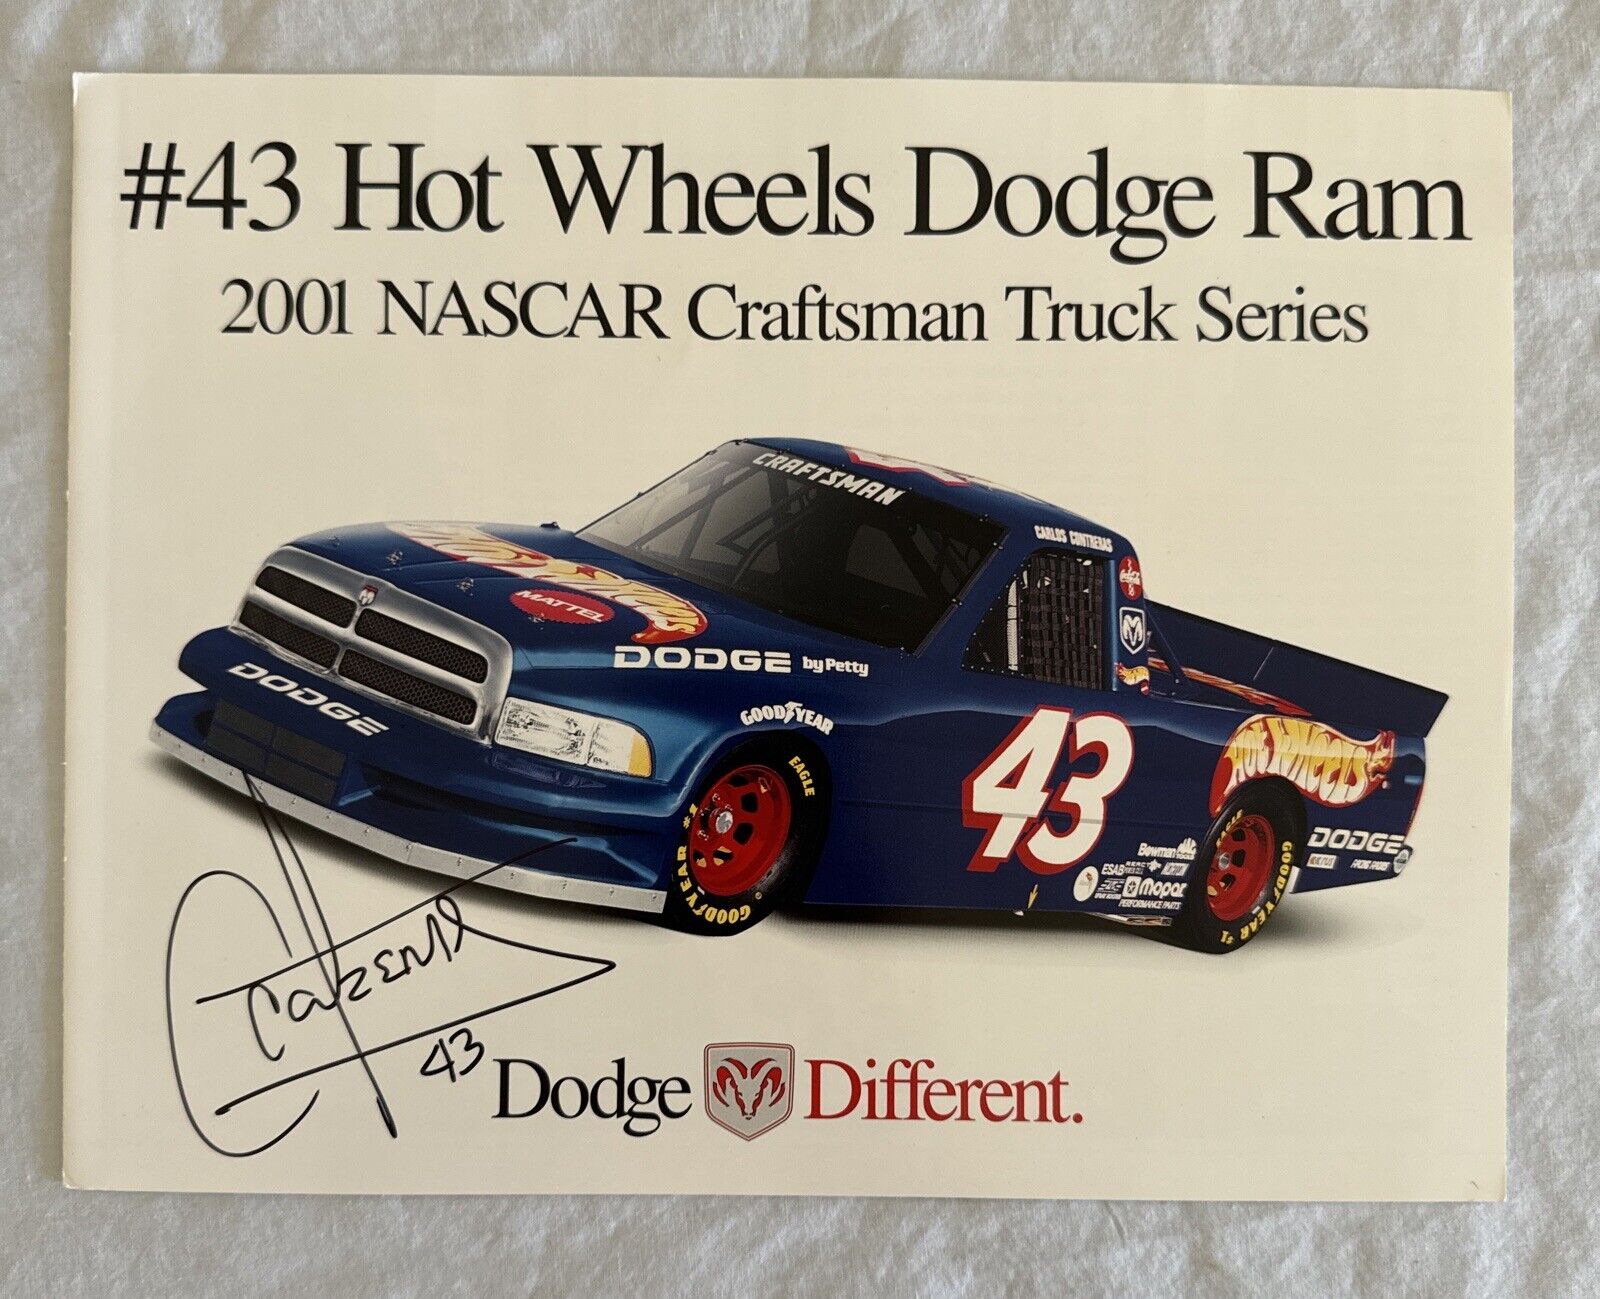 2001 Carlos Contreras #43 Hot Wheels Dodge Ram - NASCAR Photo Card 8.5”x11”